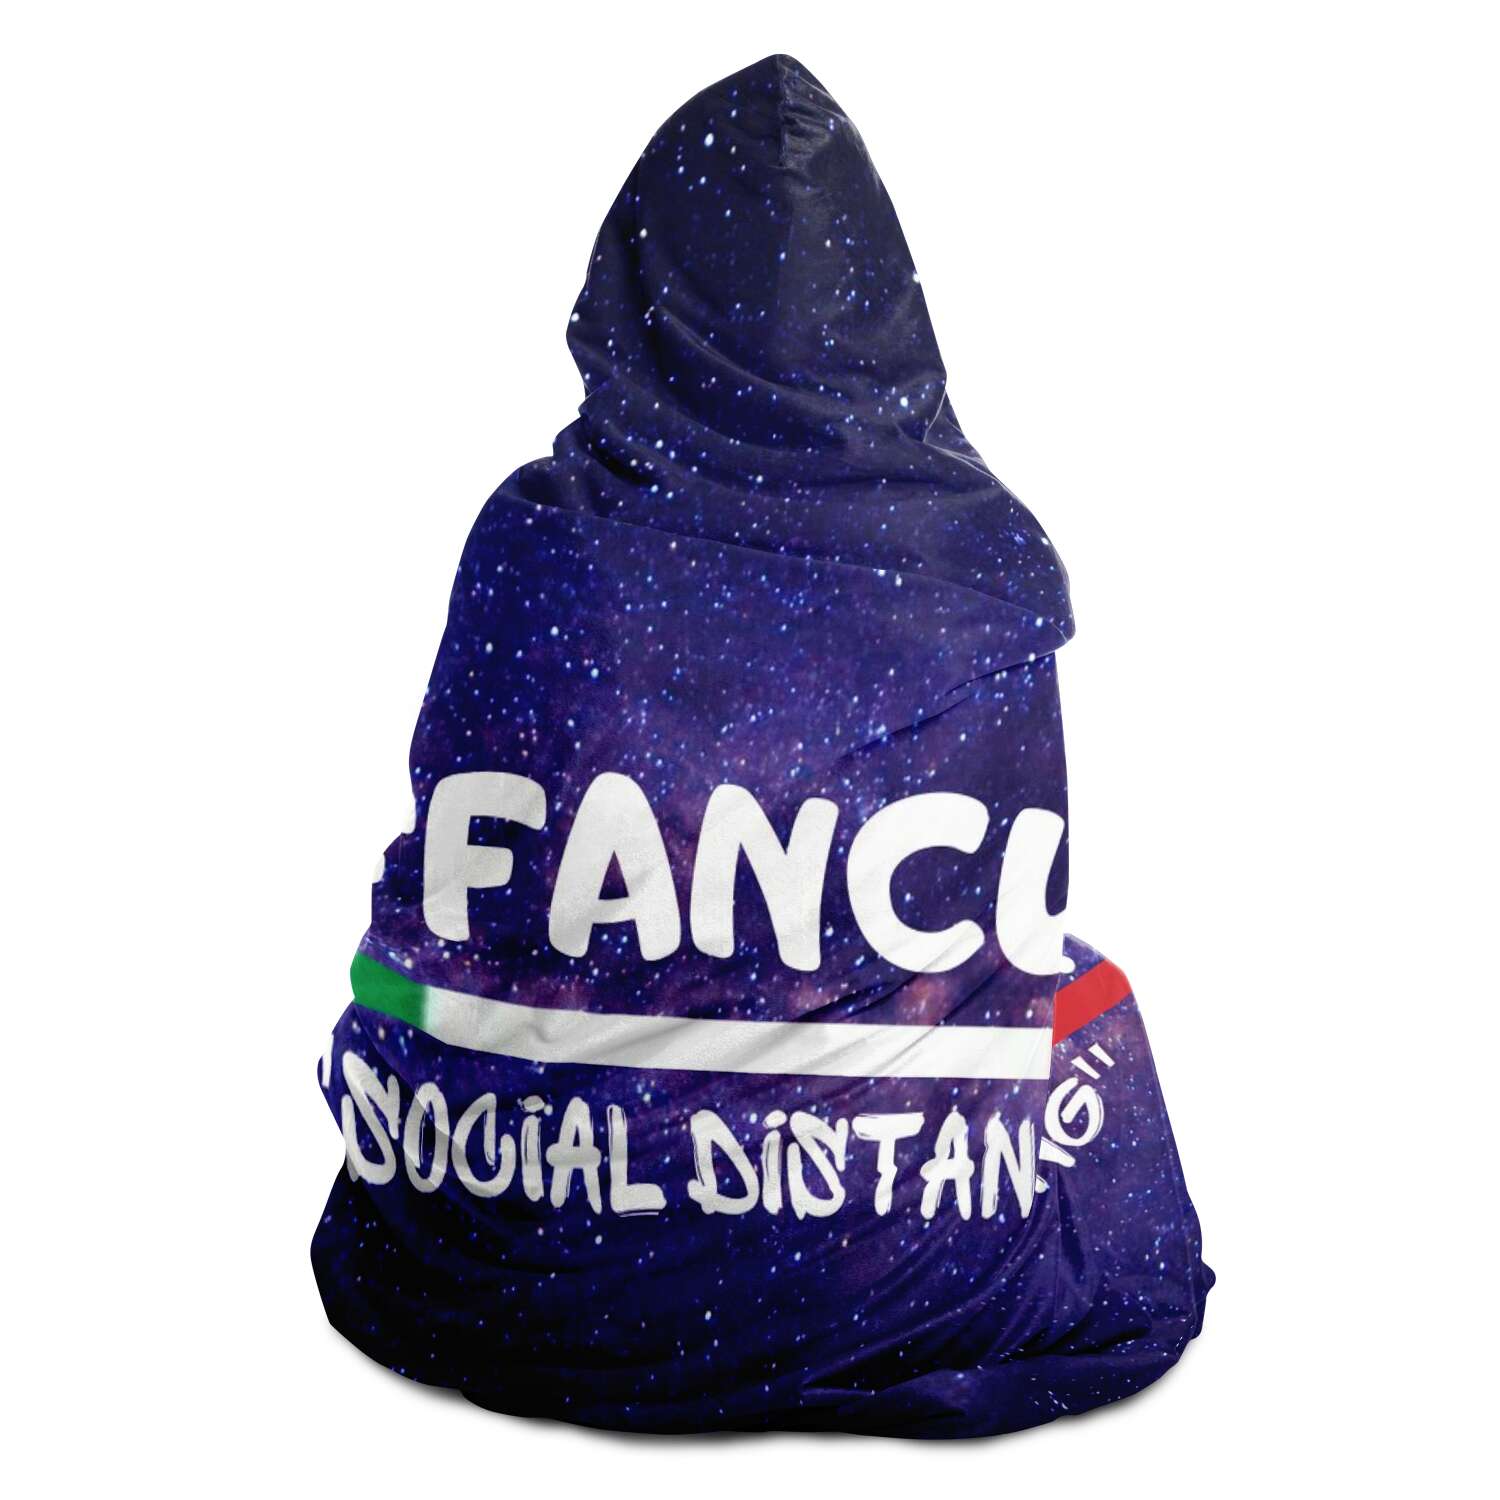 Vaffanculo "Social Distancing" Galaxy Hooded Blanket